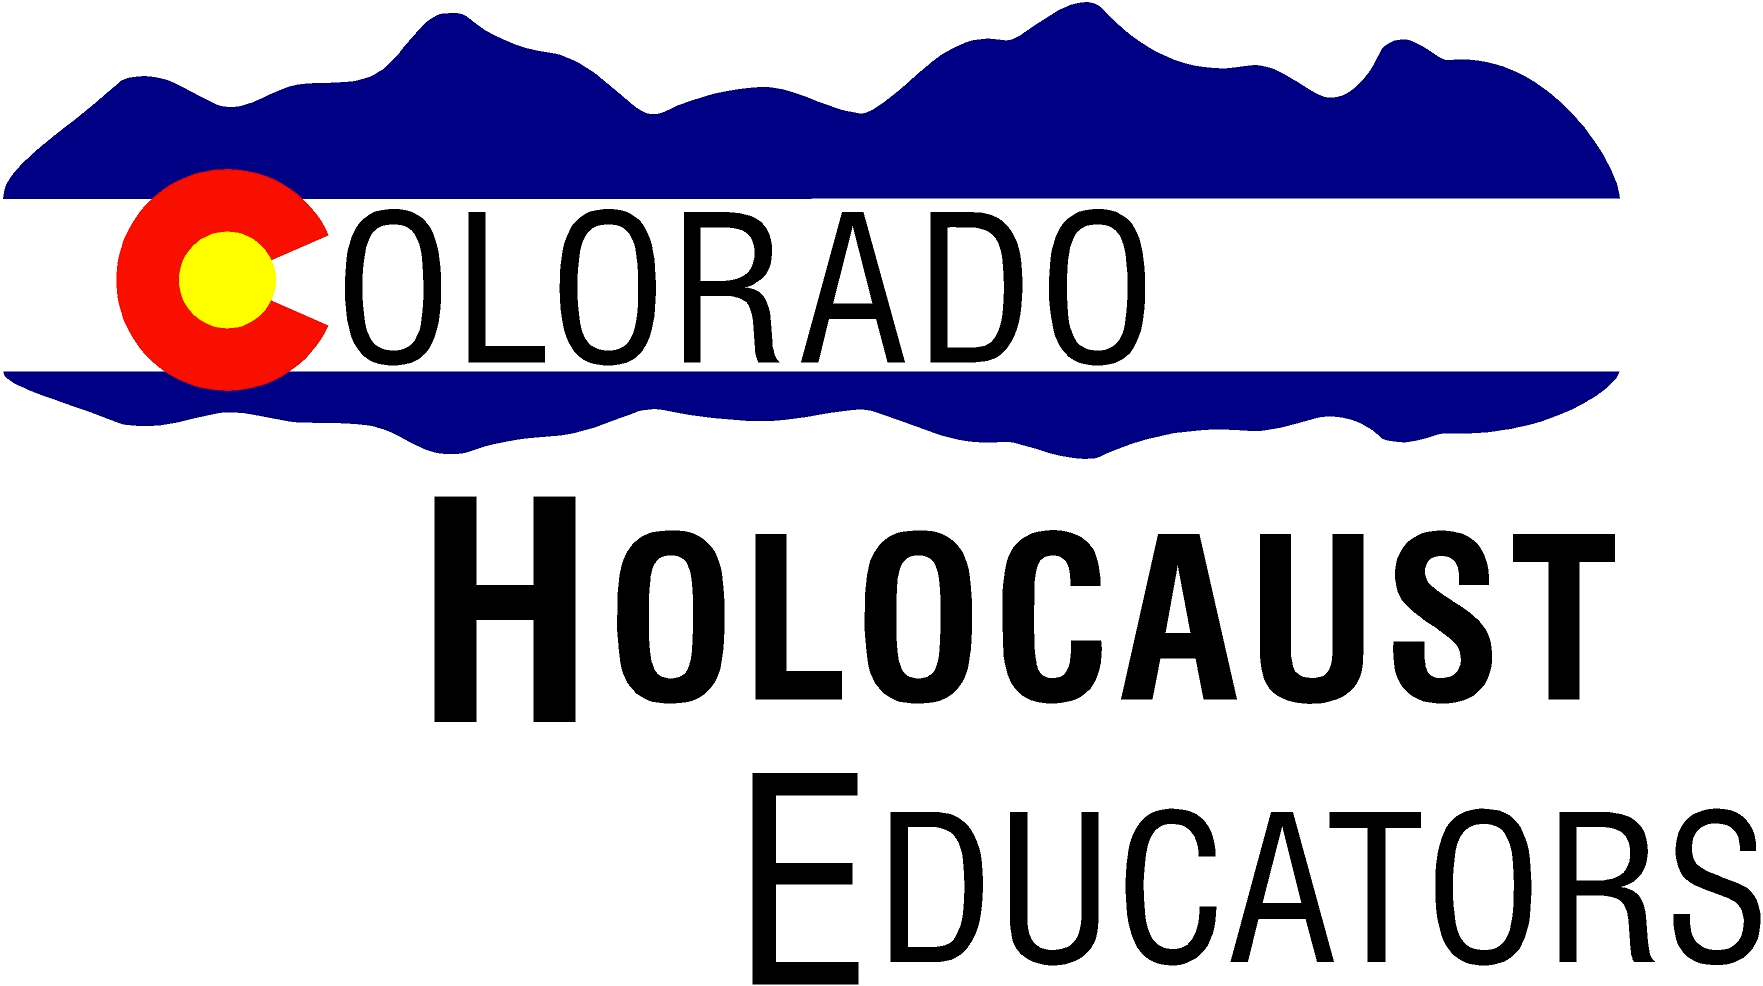 Colorado Holocaust Educators